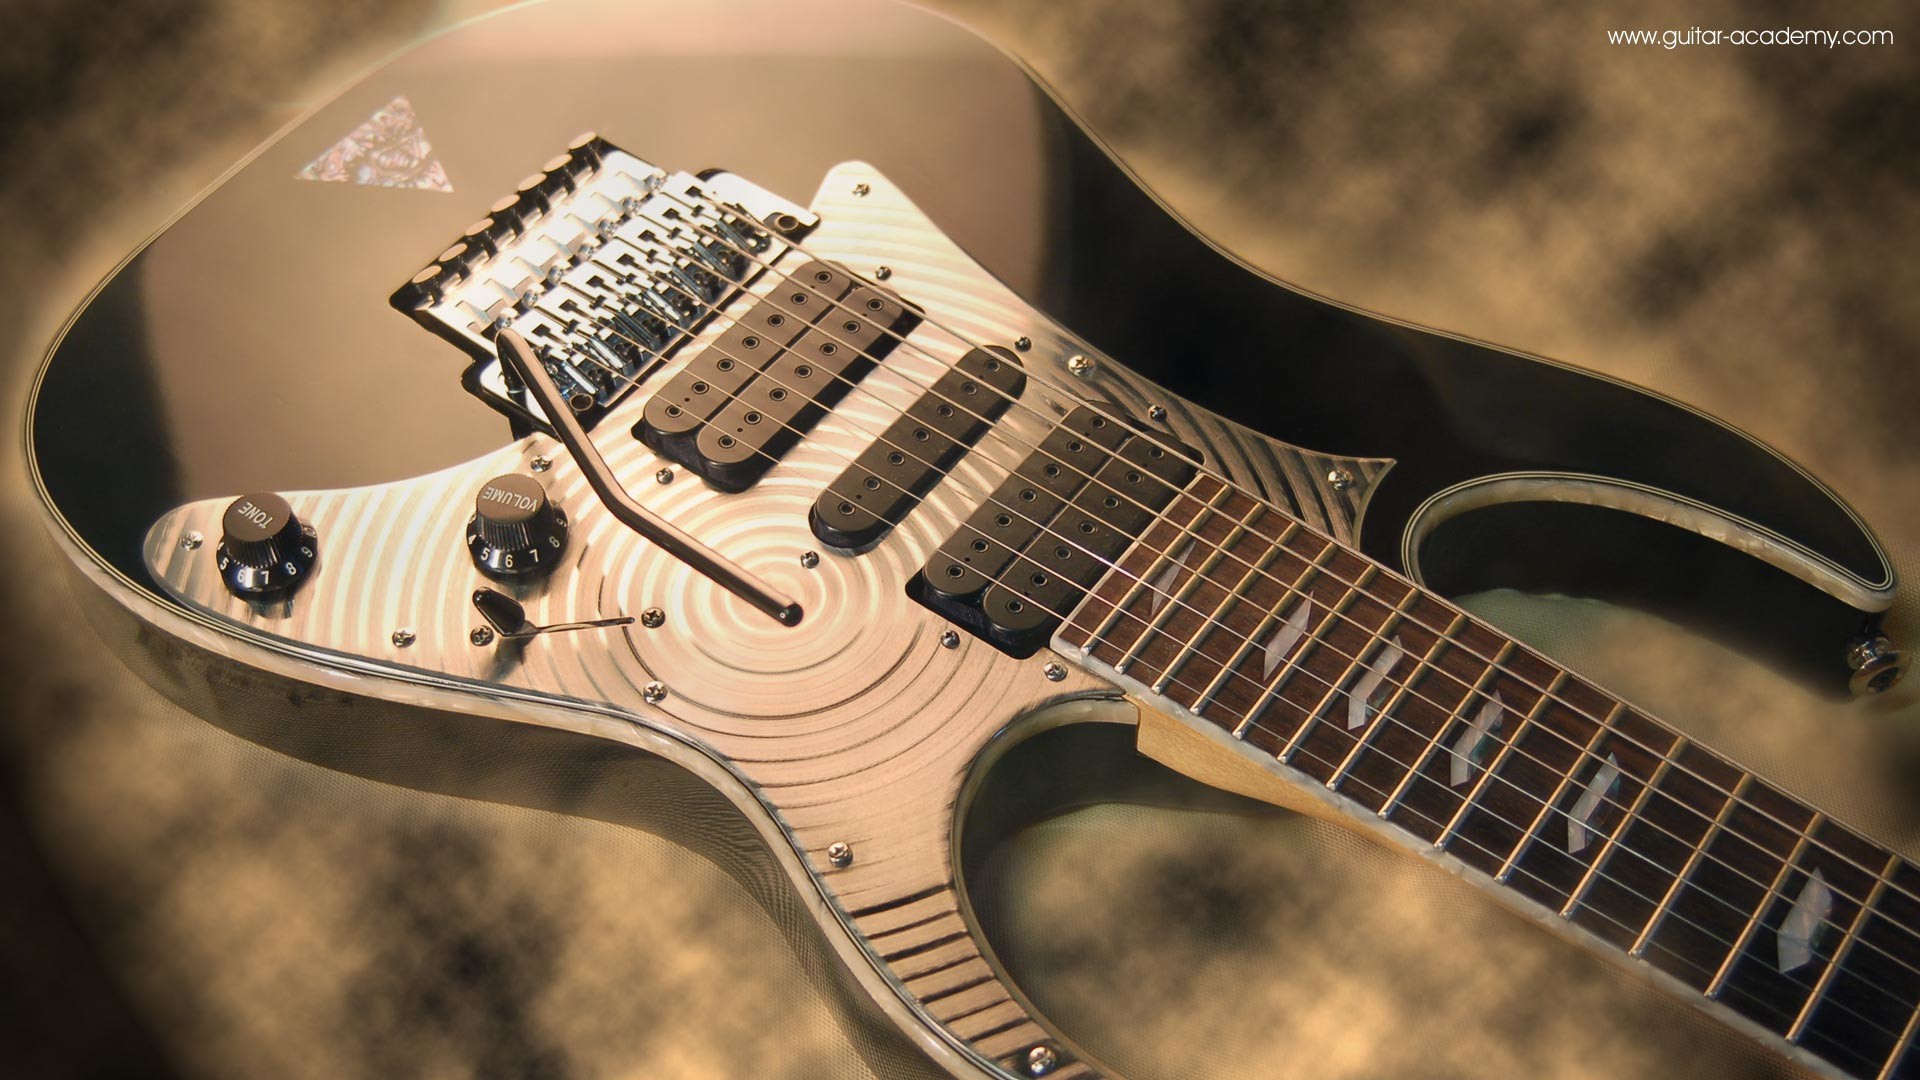 1920x1080 Guitar wallpaper, Ibanez Universe 7 string guitar body, custom scratchplate